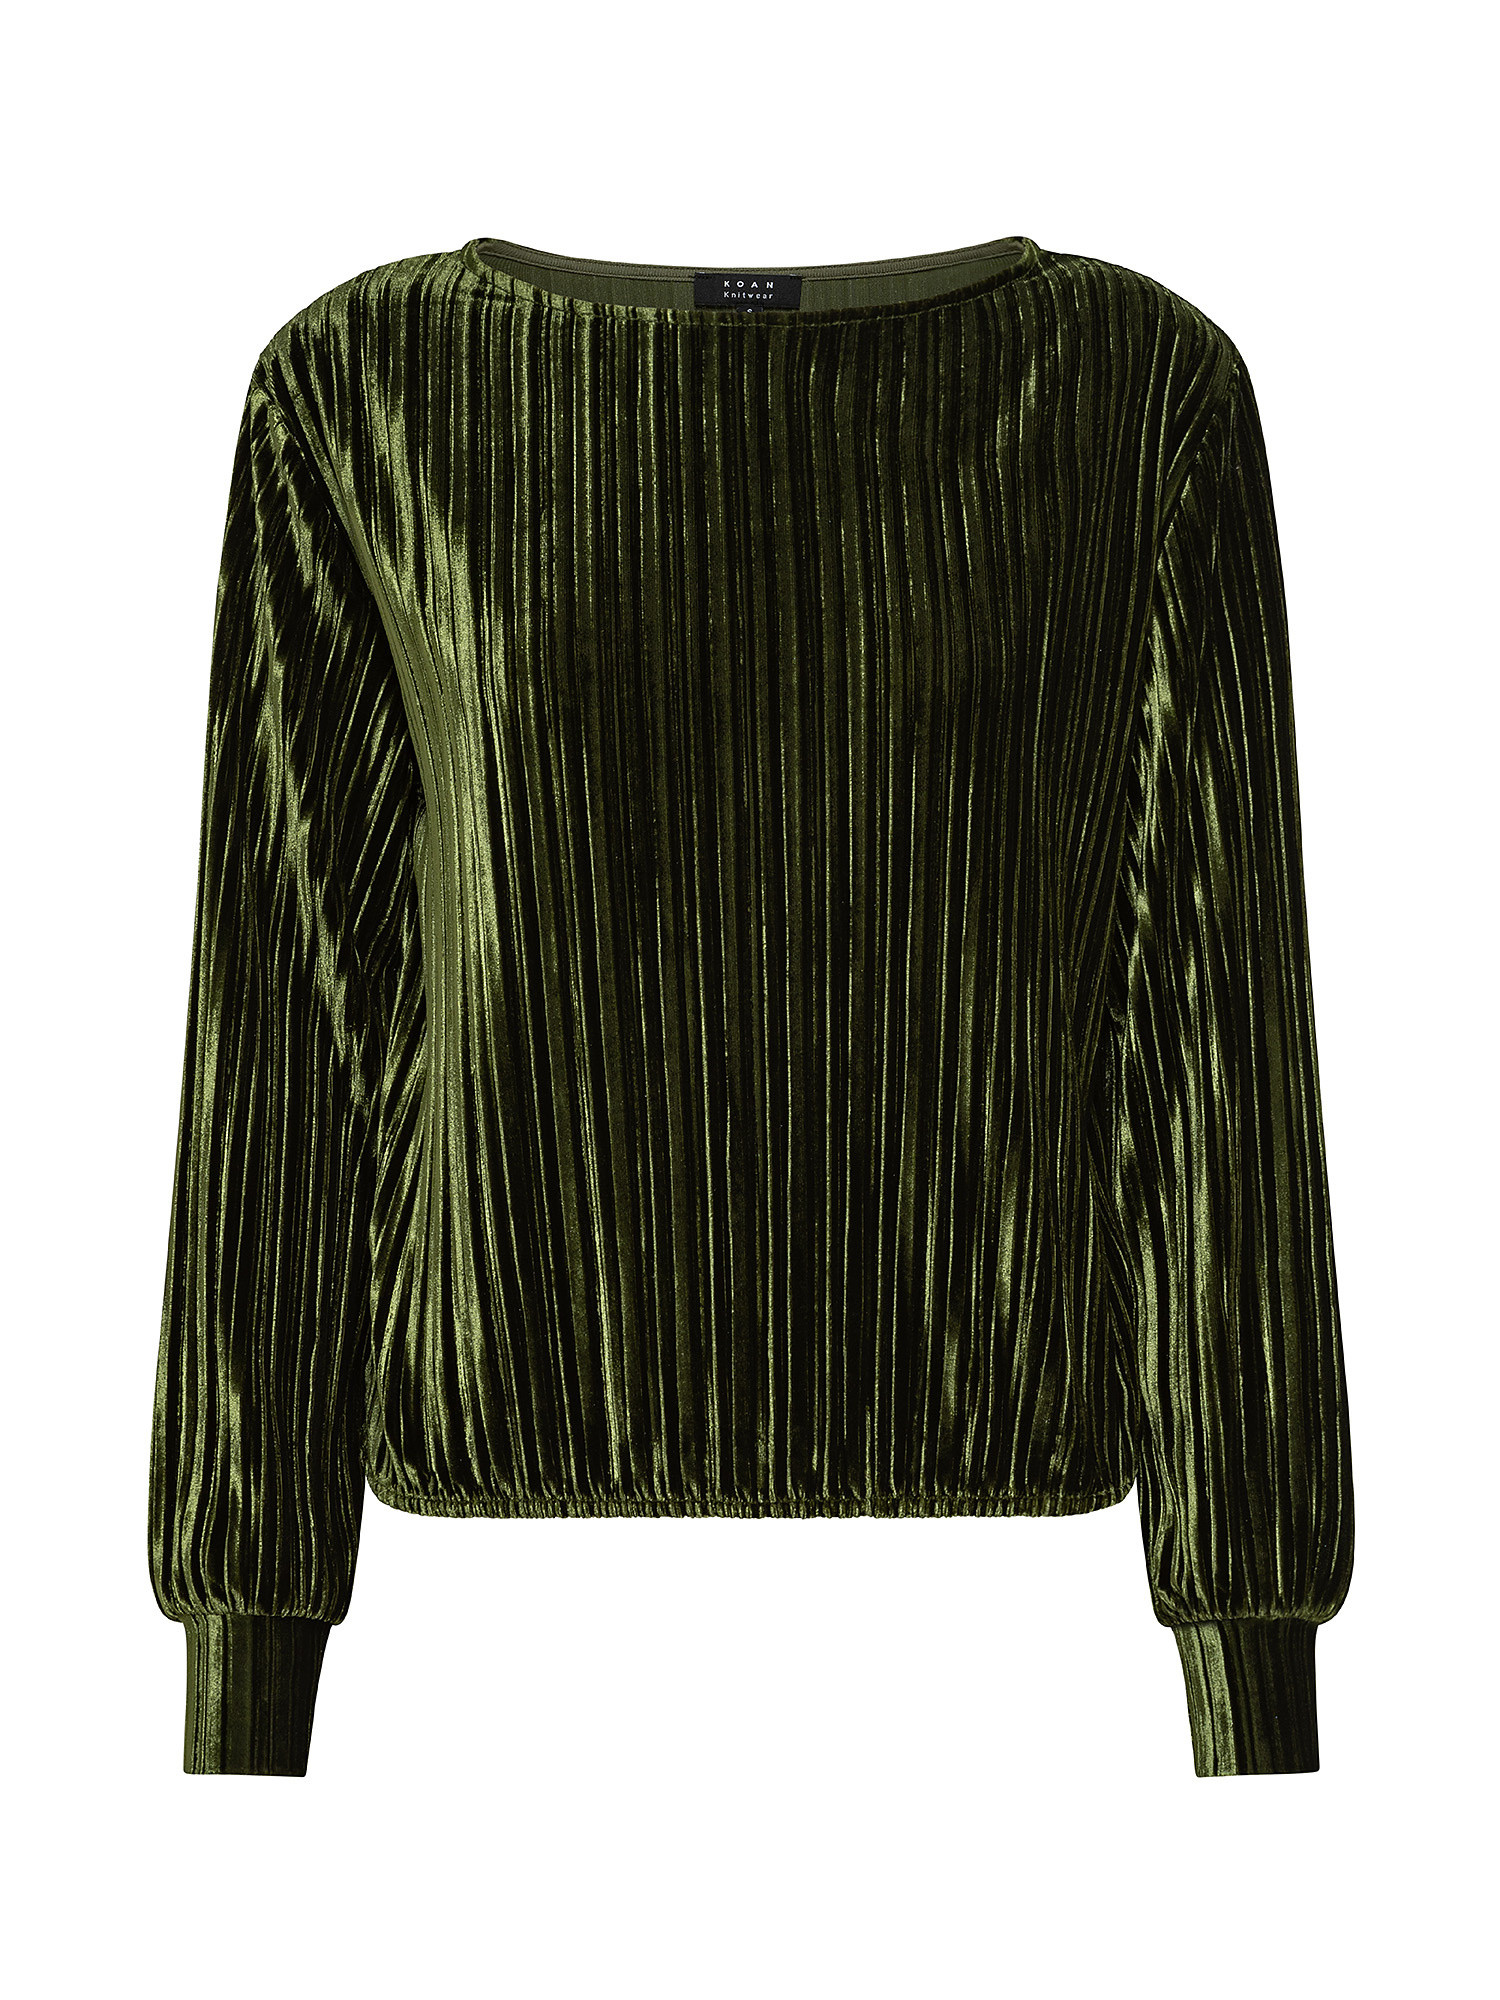 T-shirt in velour plissé, Verde, large image number 0